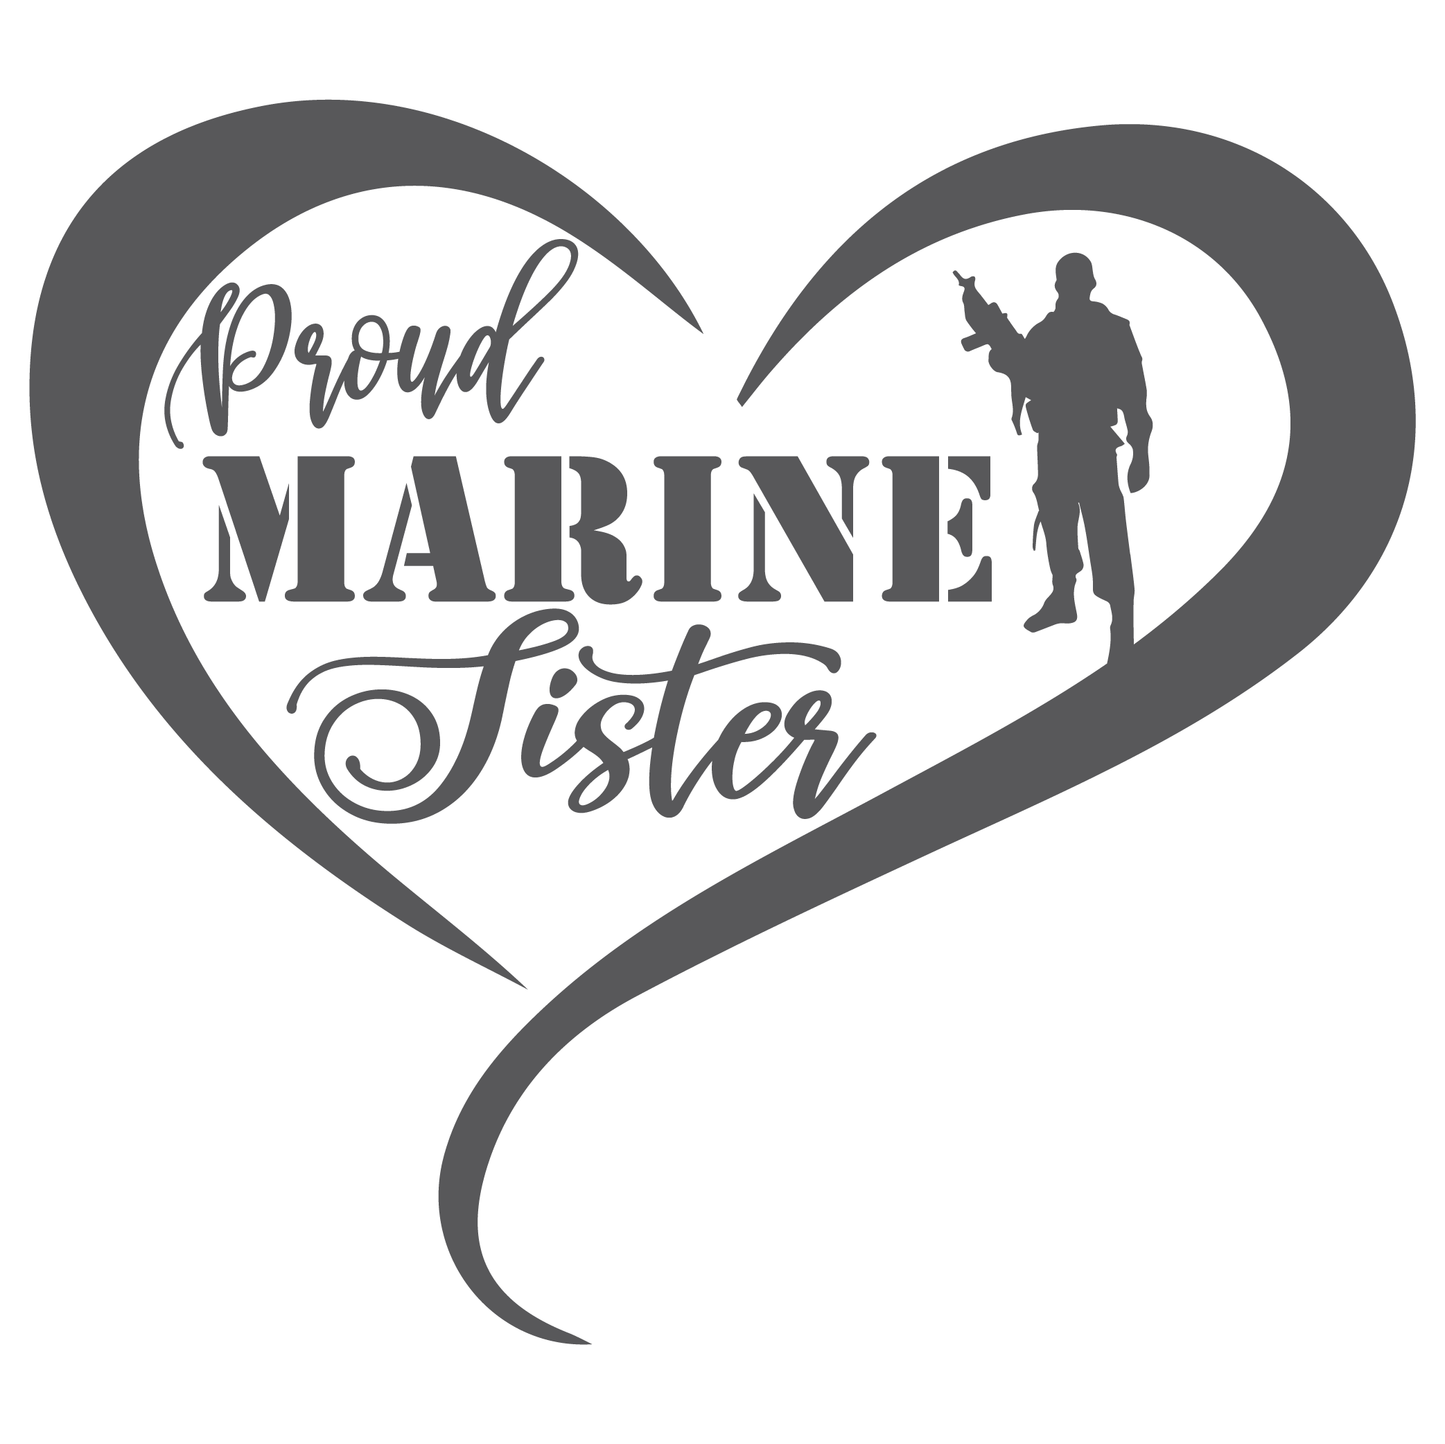 ShopVinylDesignStore.com Proud Marine Sister, Heart with Soldier Wide Shop Vinyl Design decals stickers